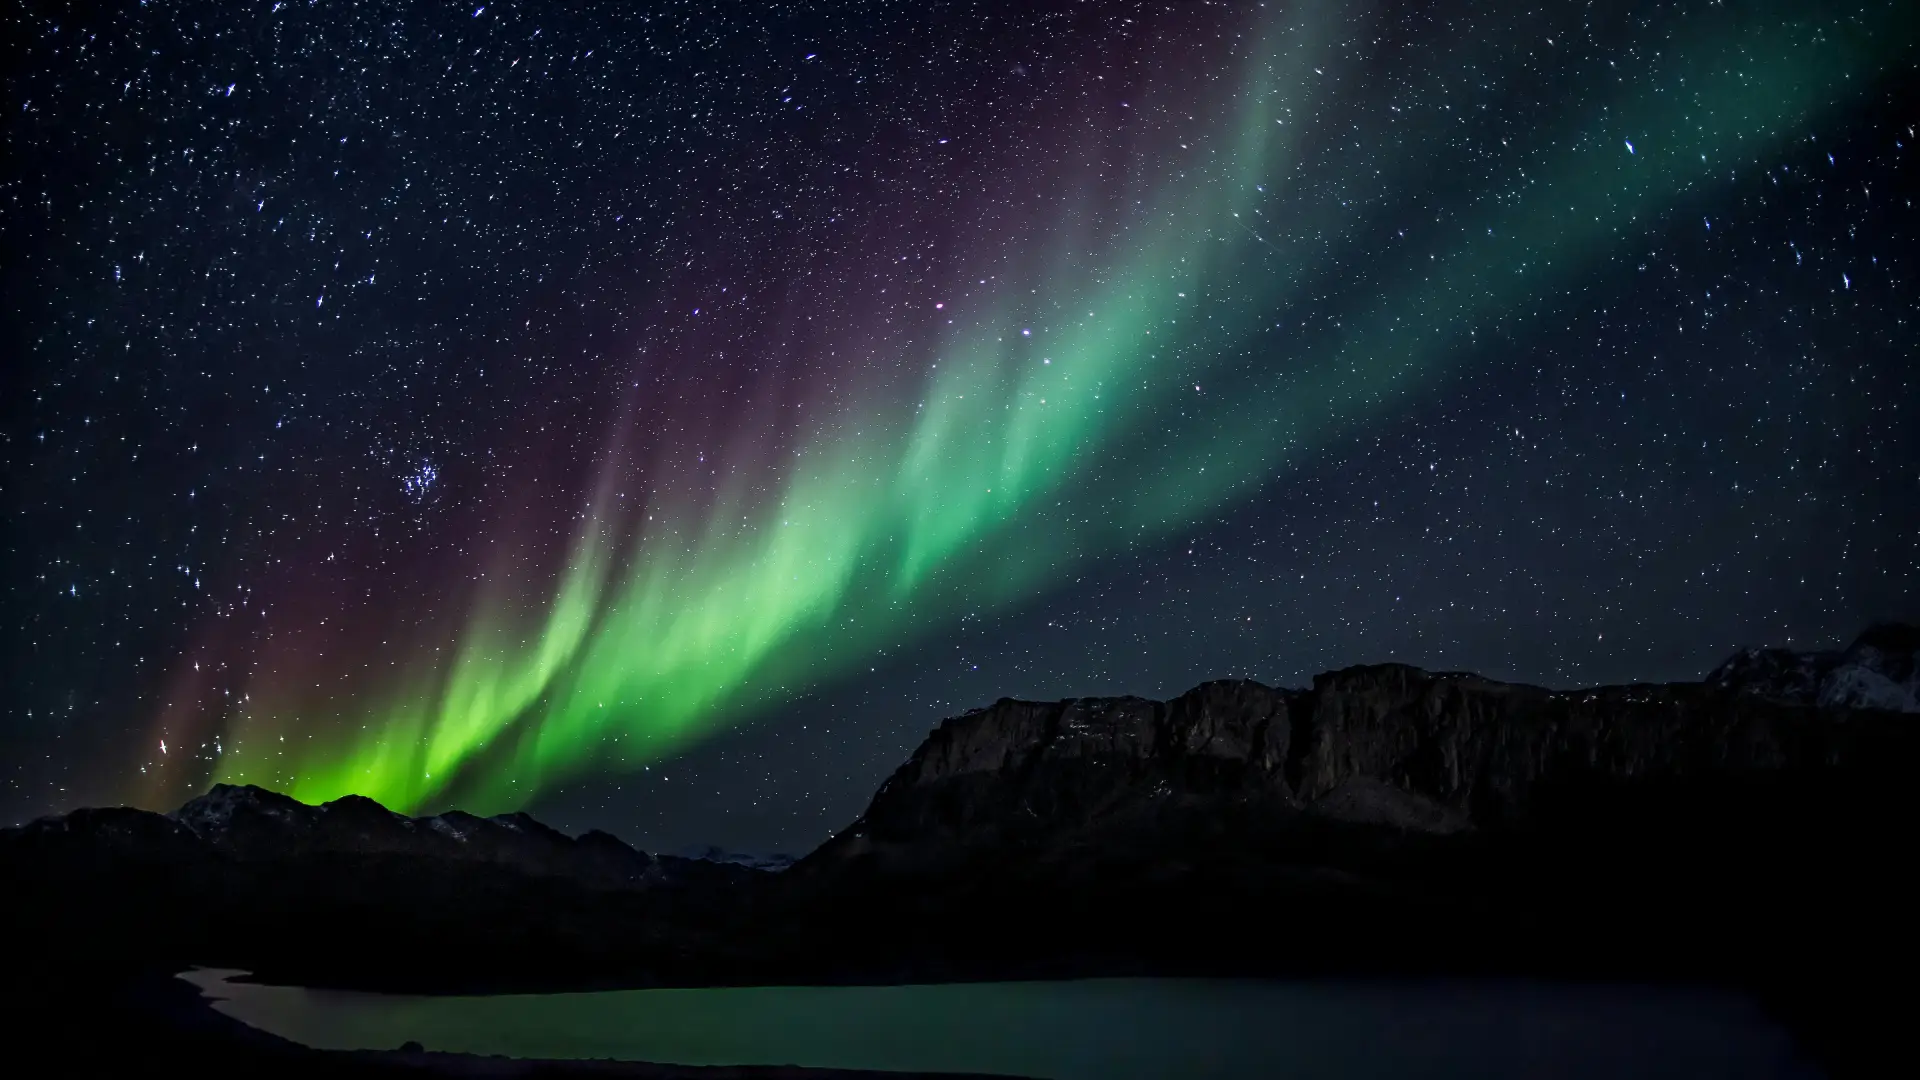 What Causes the Mesmerizing Aurora Borealis to Occur?